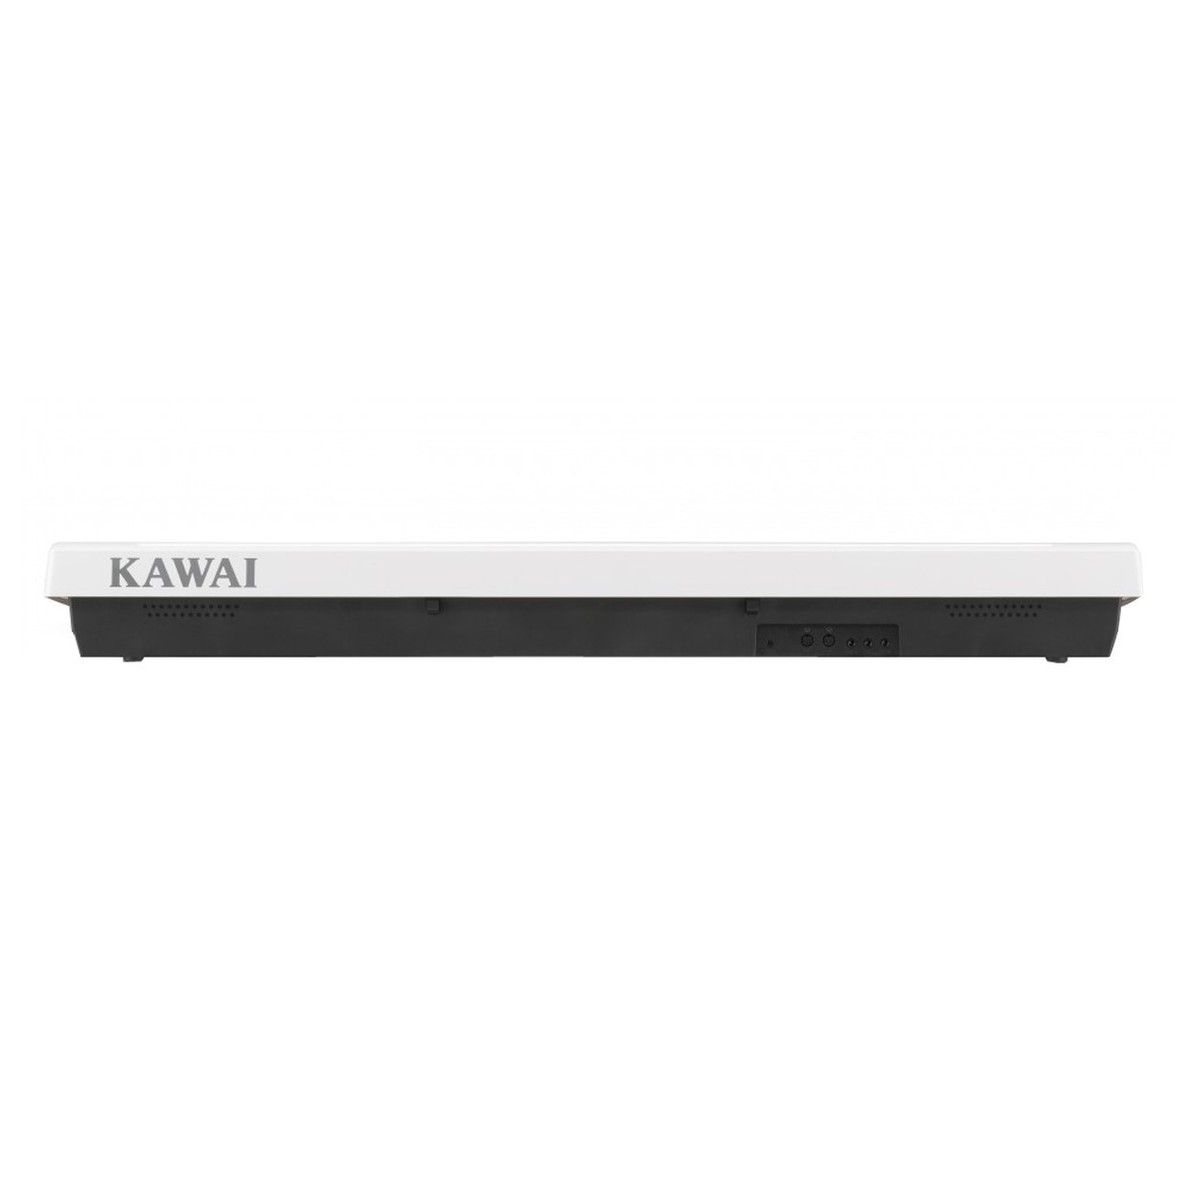 Kawai Es110 - Blanc - Piano digital portatil - Variation 2